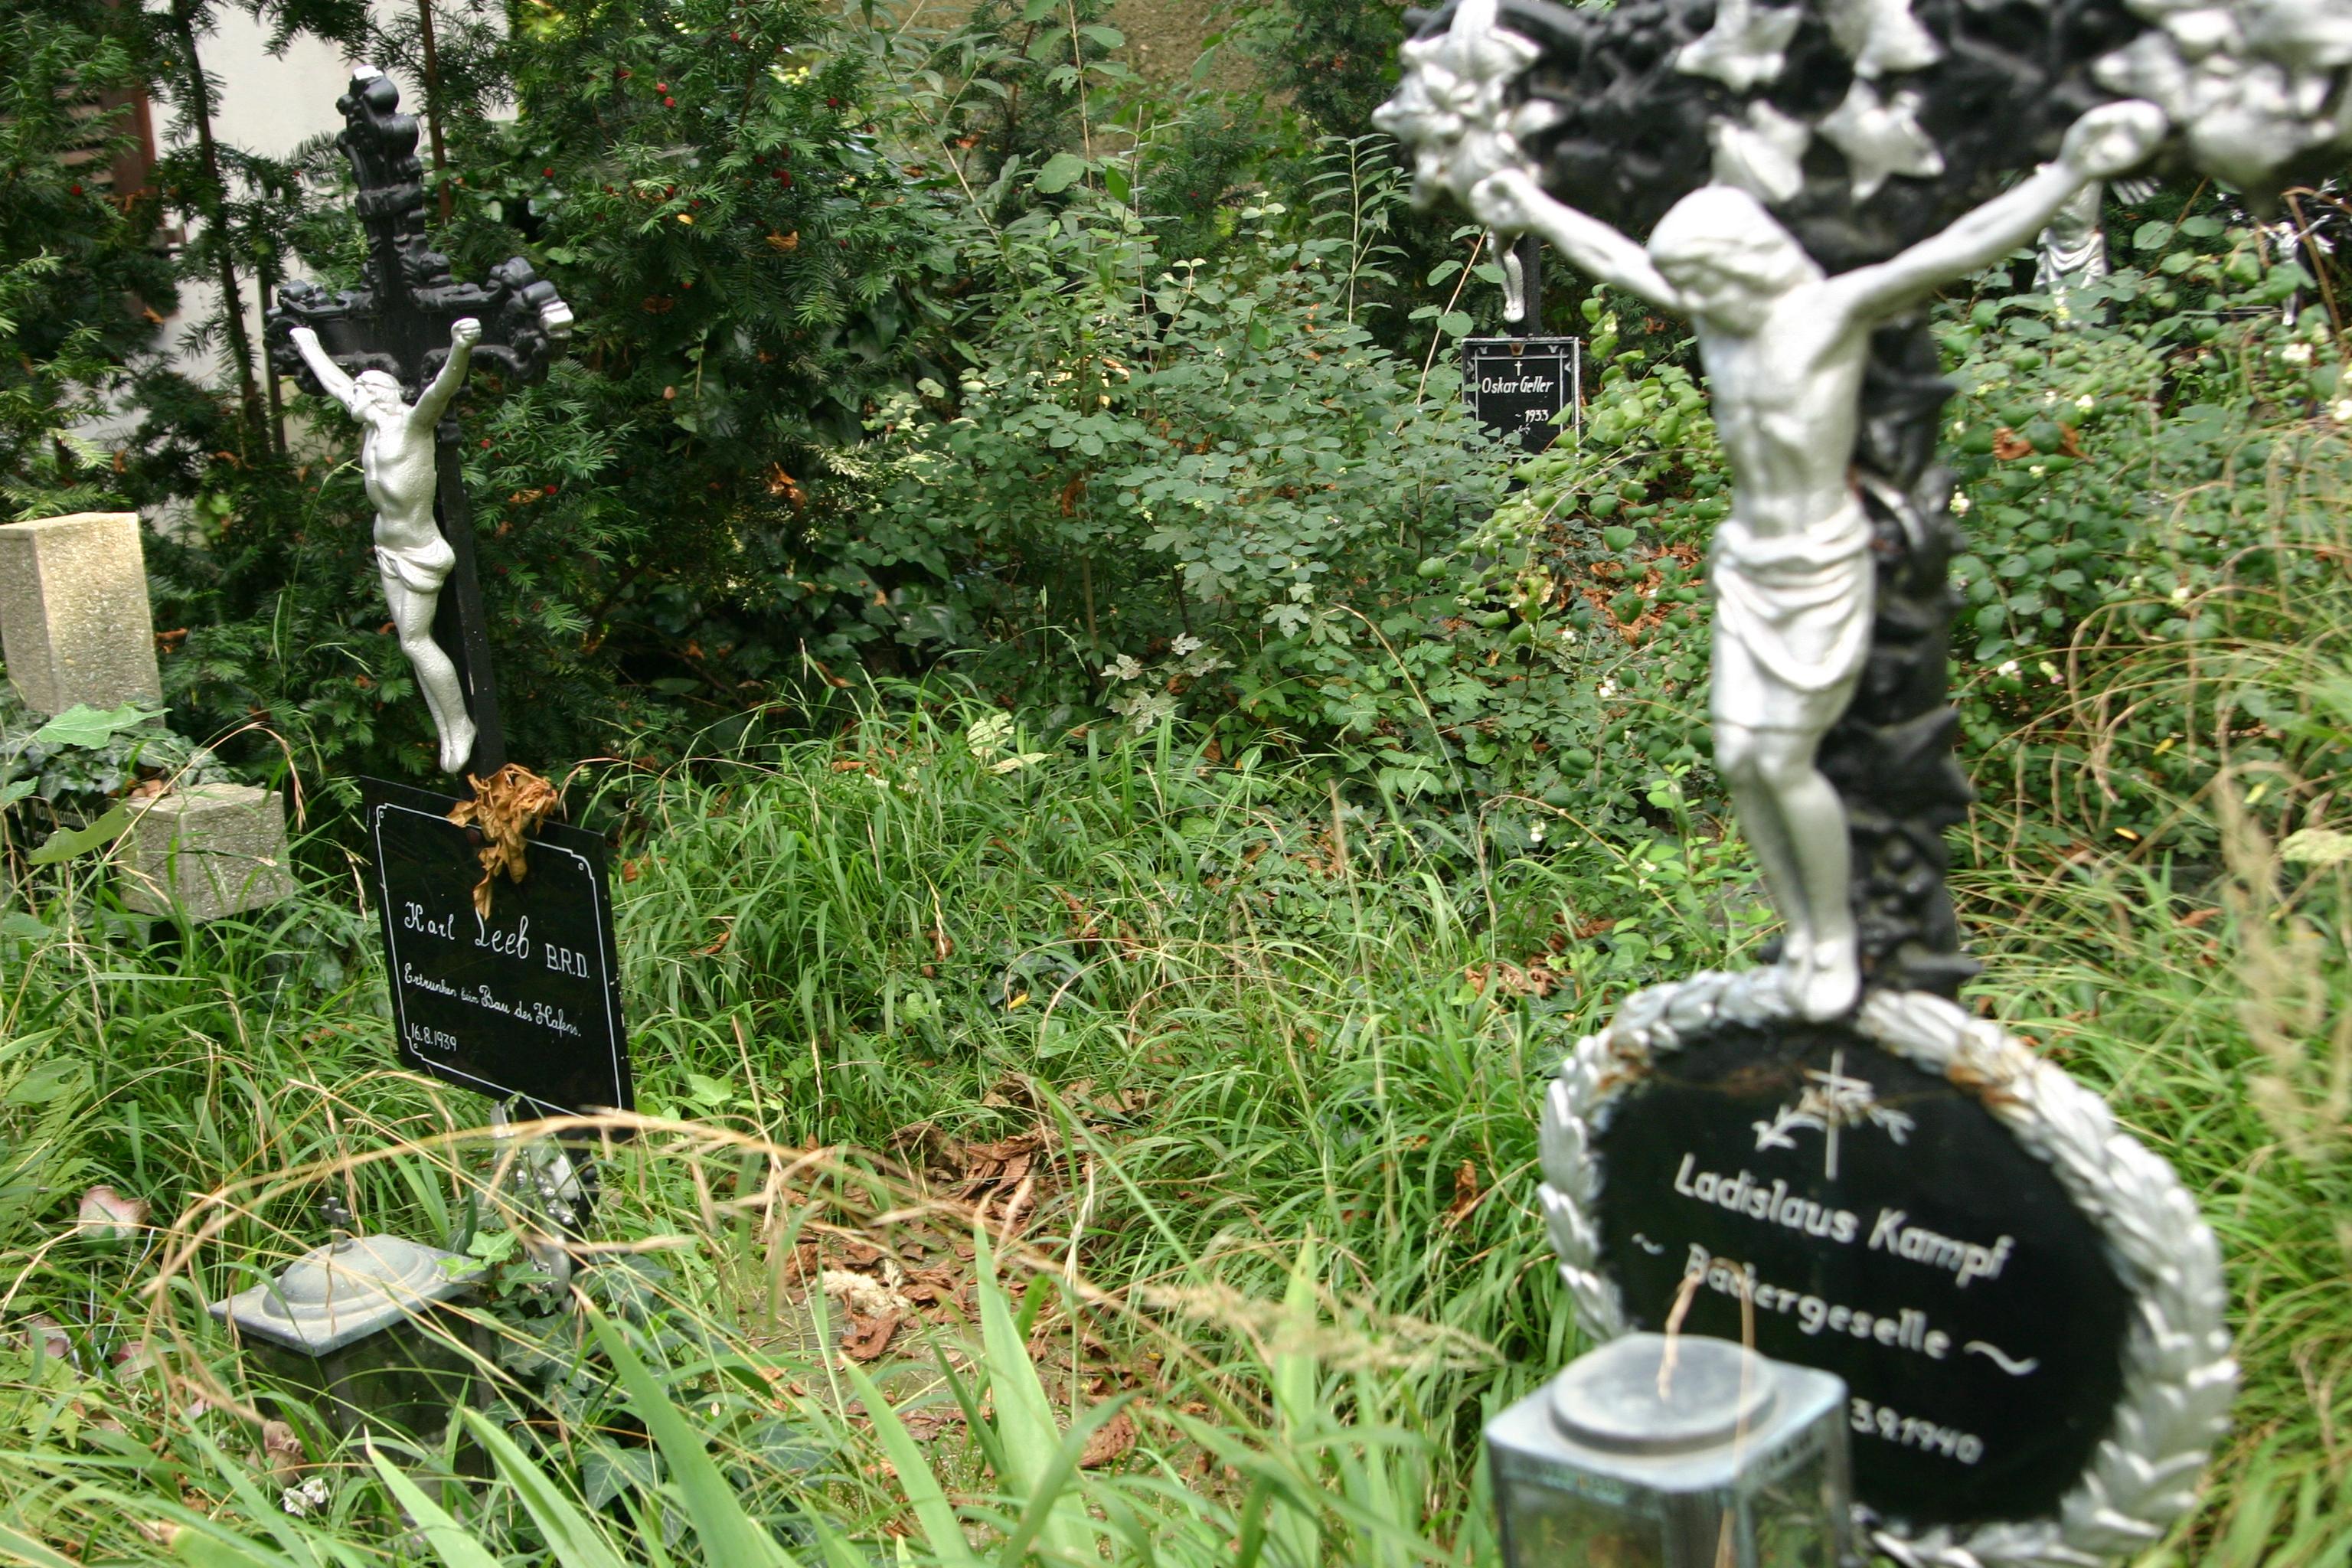 Cover image of this place Friedhof der Namenlosen